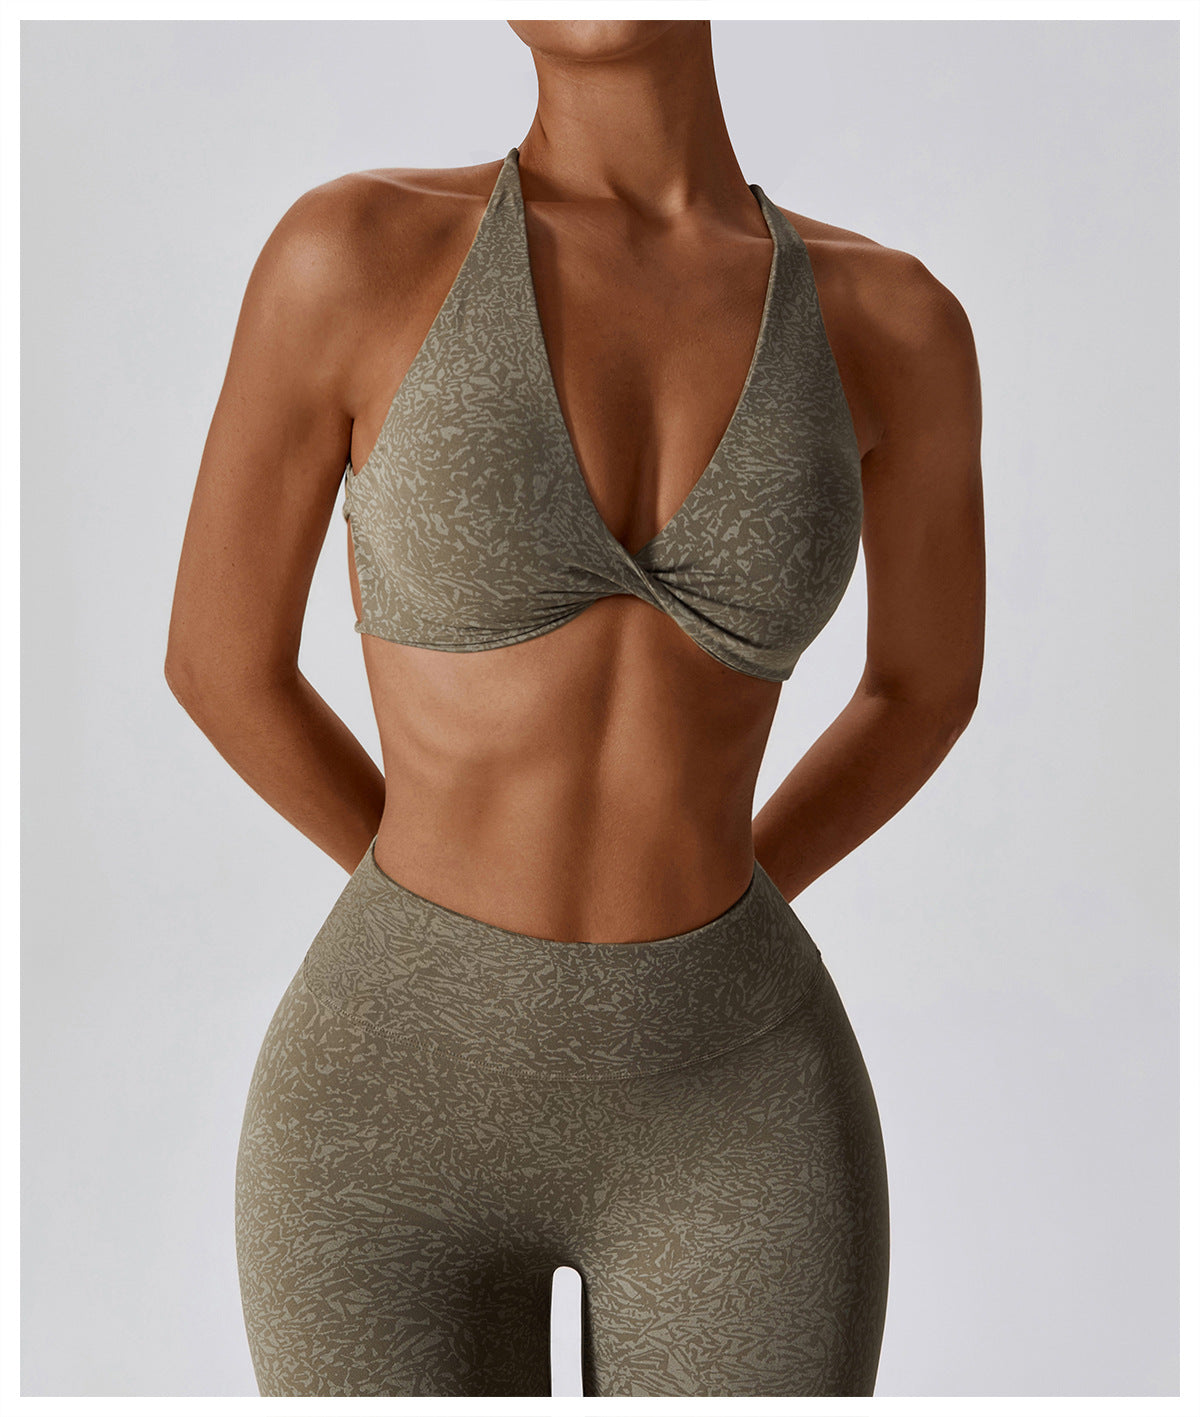 Printed sexy yoga bra tight sports underwear nude fitness yoga clothing 8256